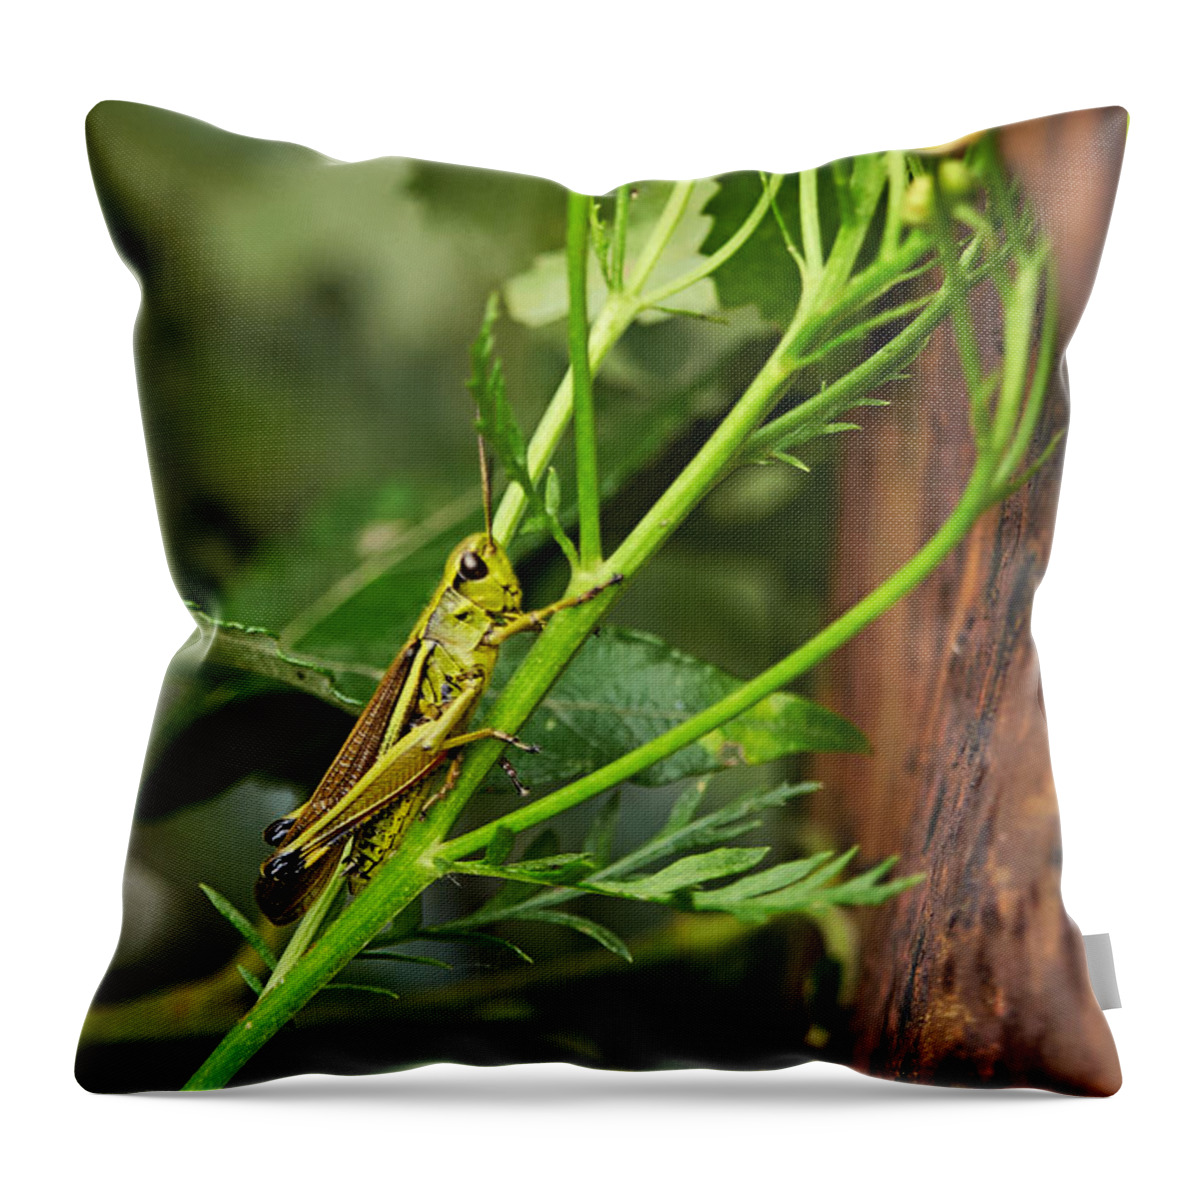 Grass Throw Pillow featuring the photograph Grasshopper by Antonio Ballesteros